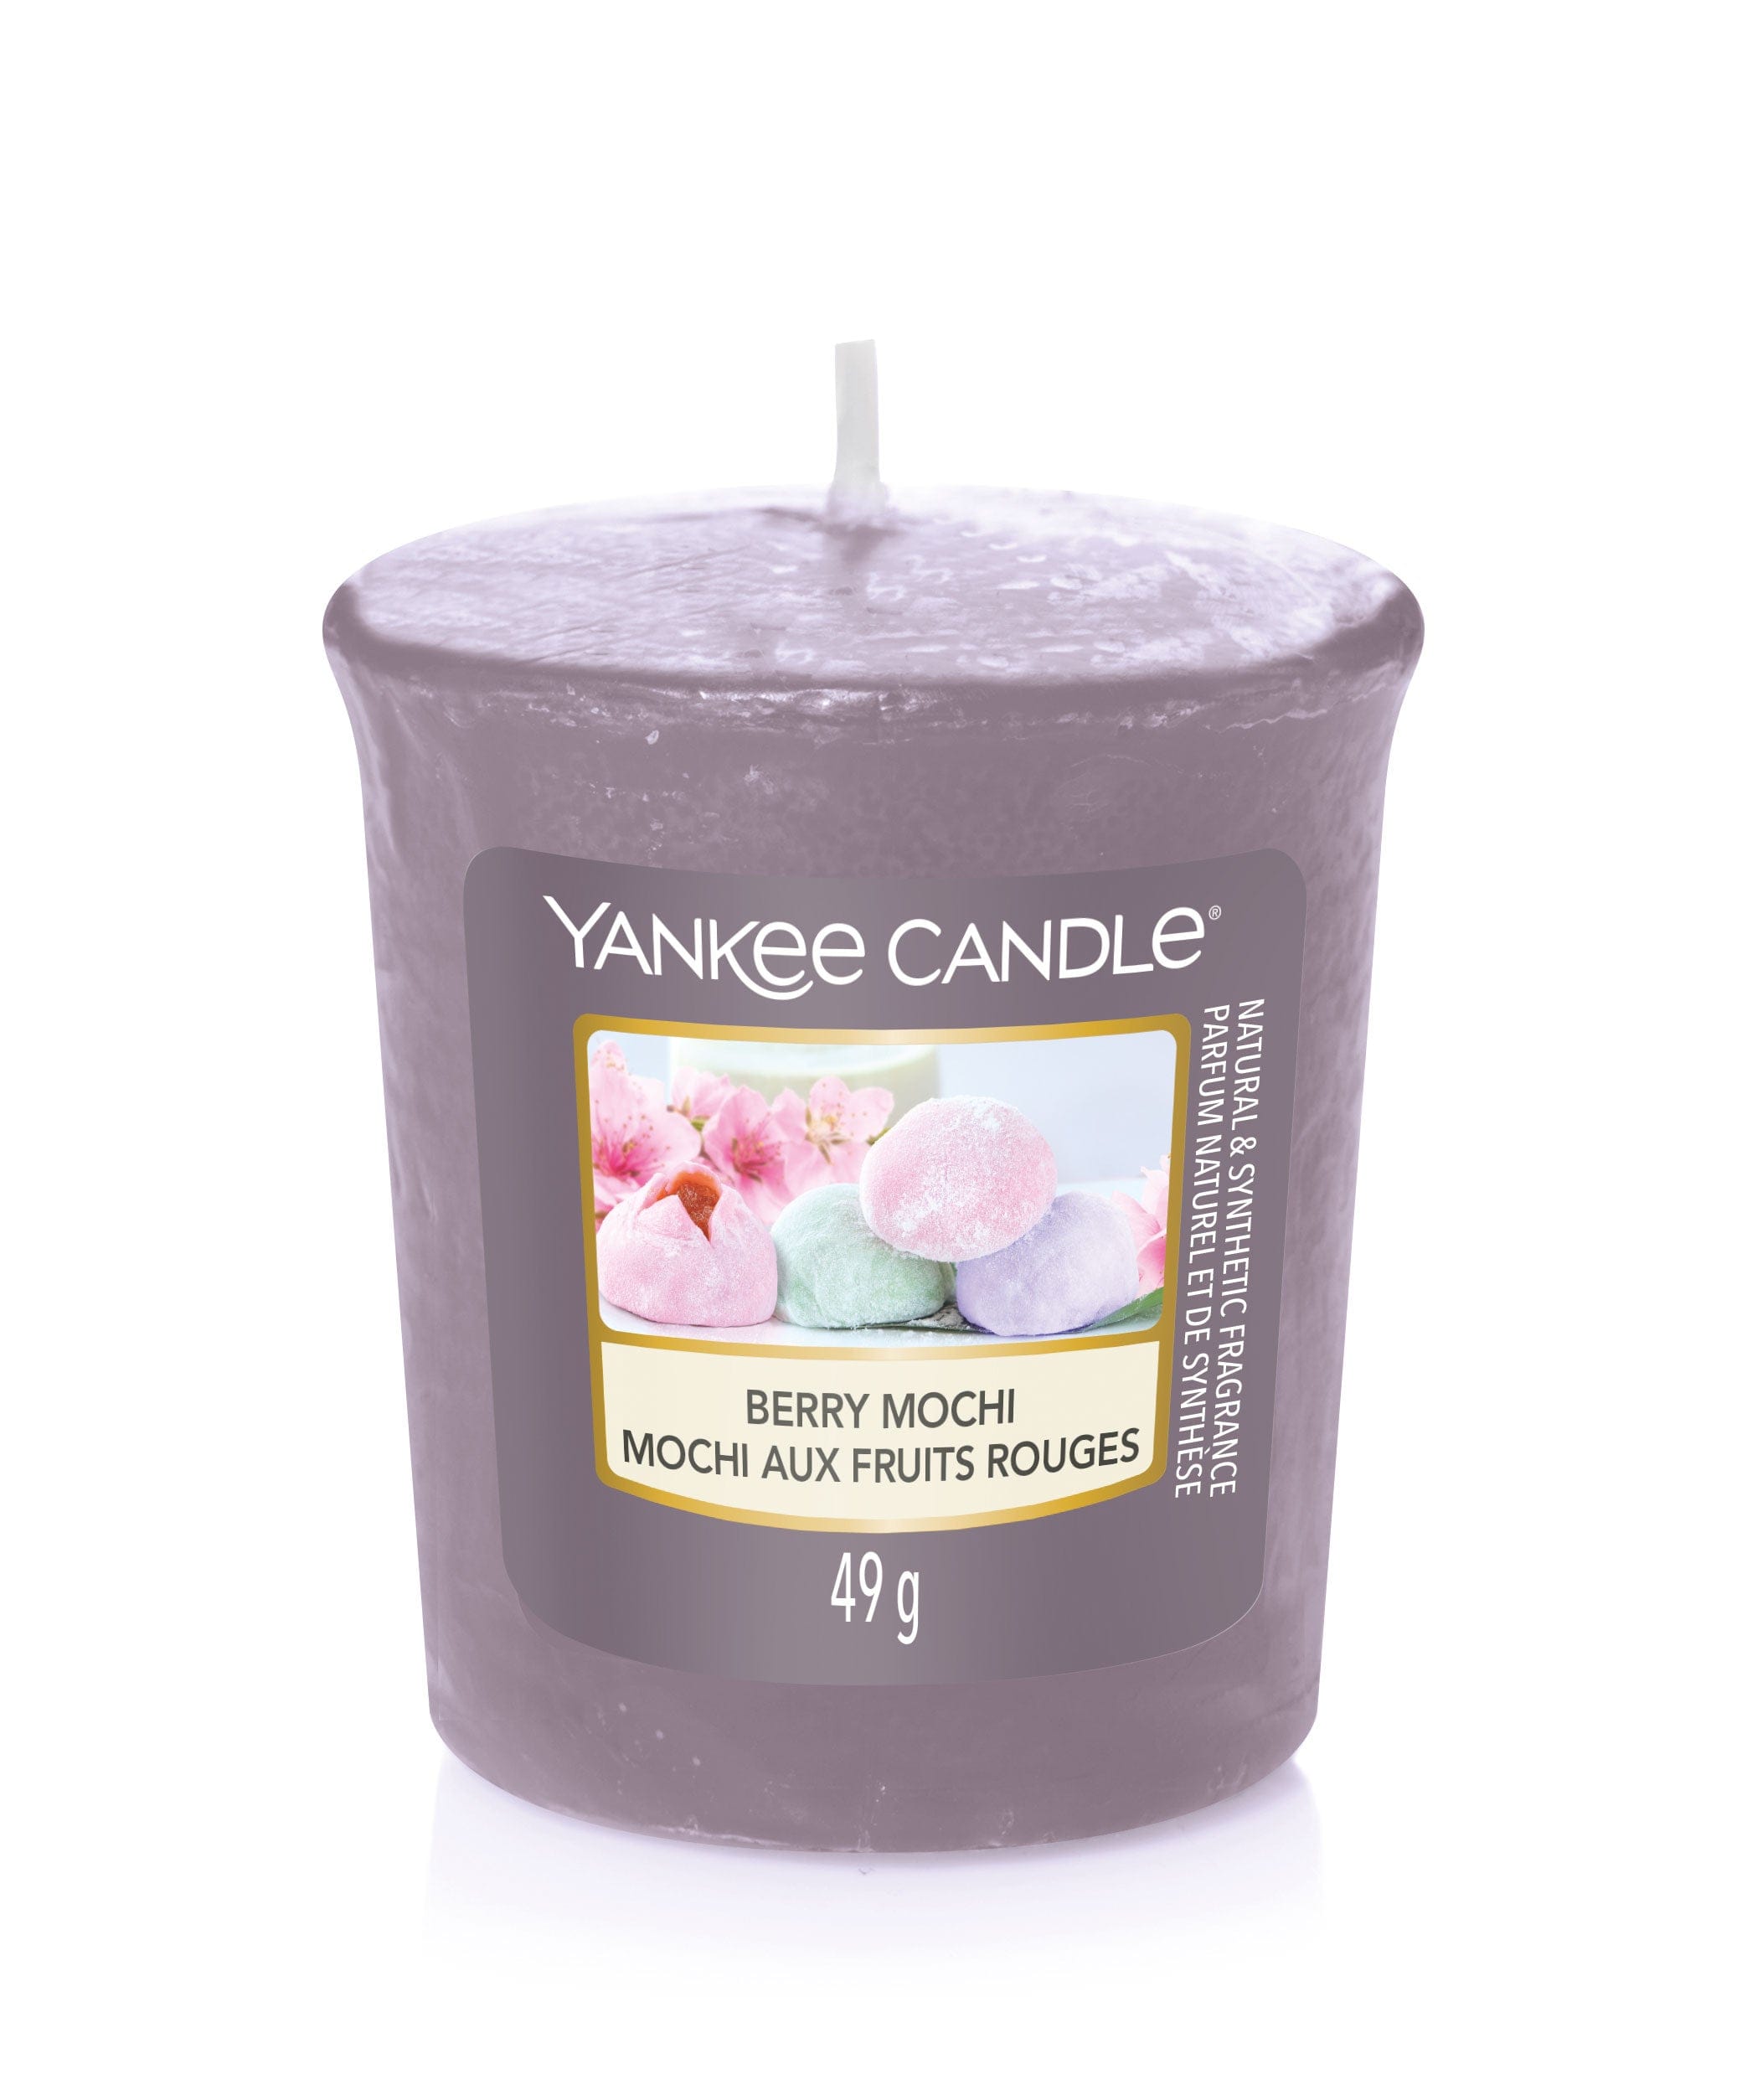 Yankee Candle Votive Candle Yankee Candle Votive Sampler - Berry Mochi